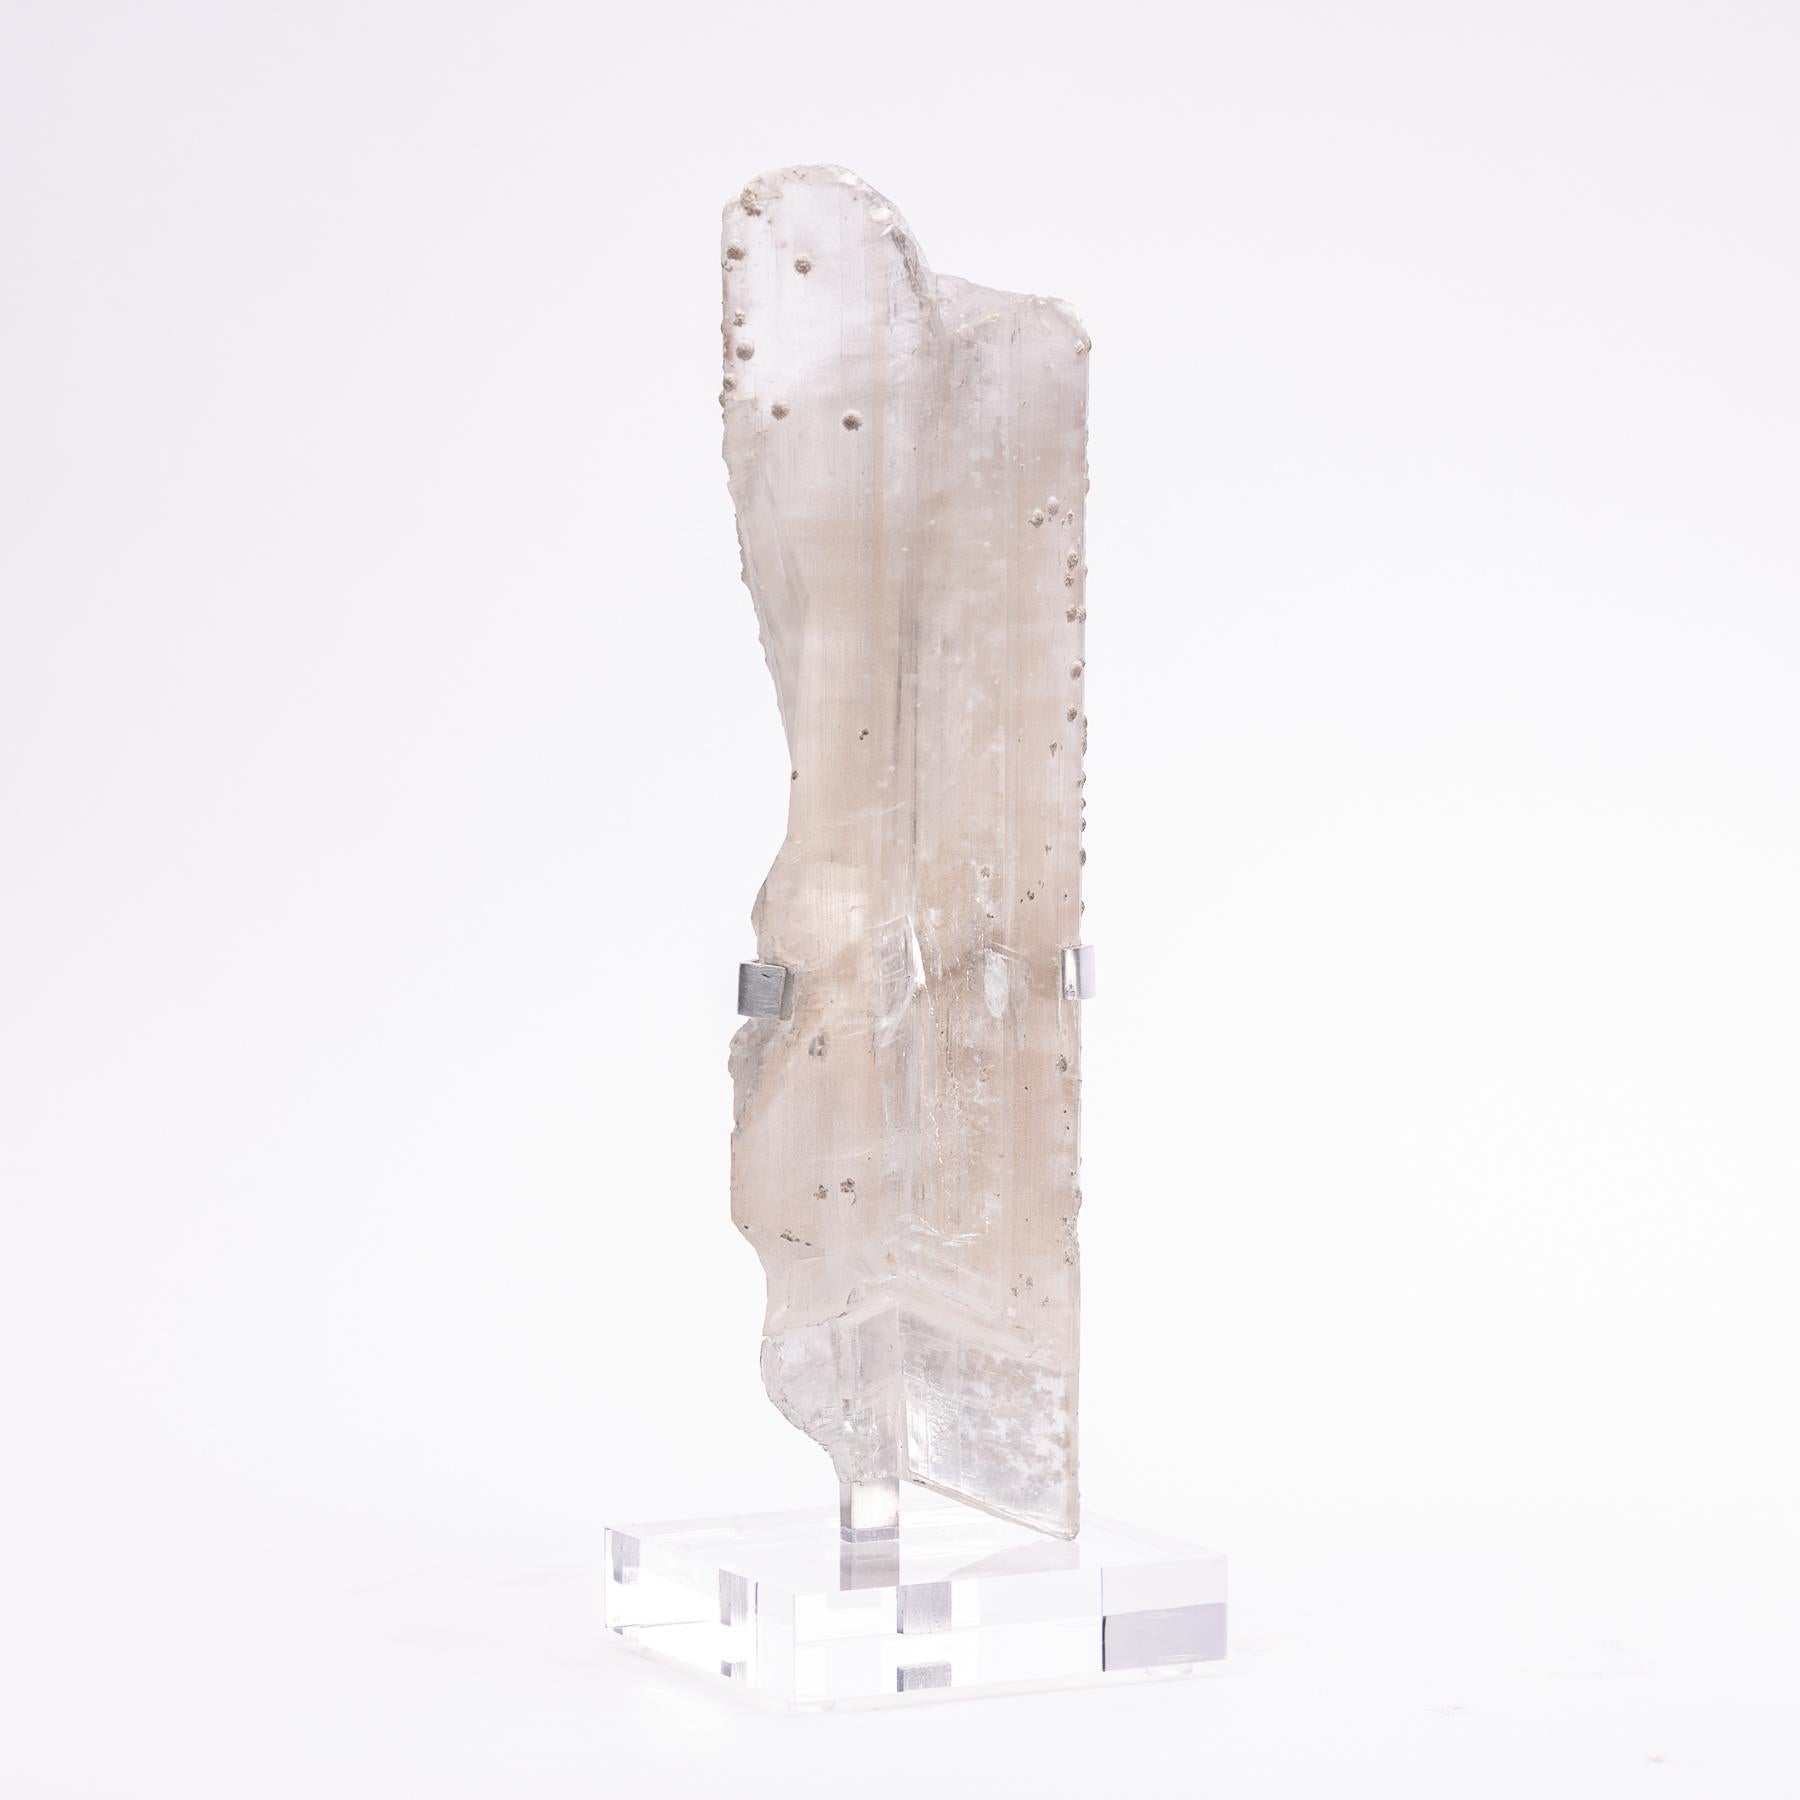 Organic Modern Selenite Crystal Mounted on Custom Acrylic and Metal Stand from Naica Mine